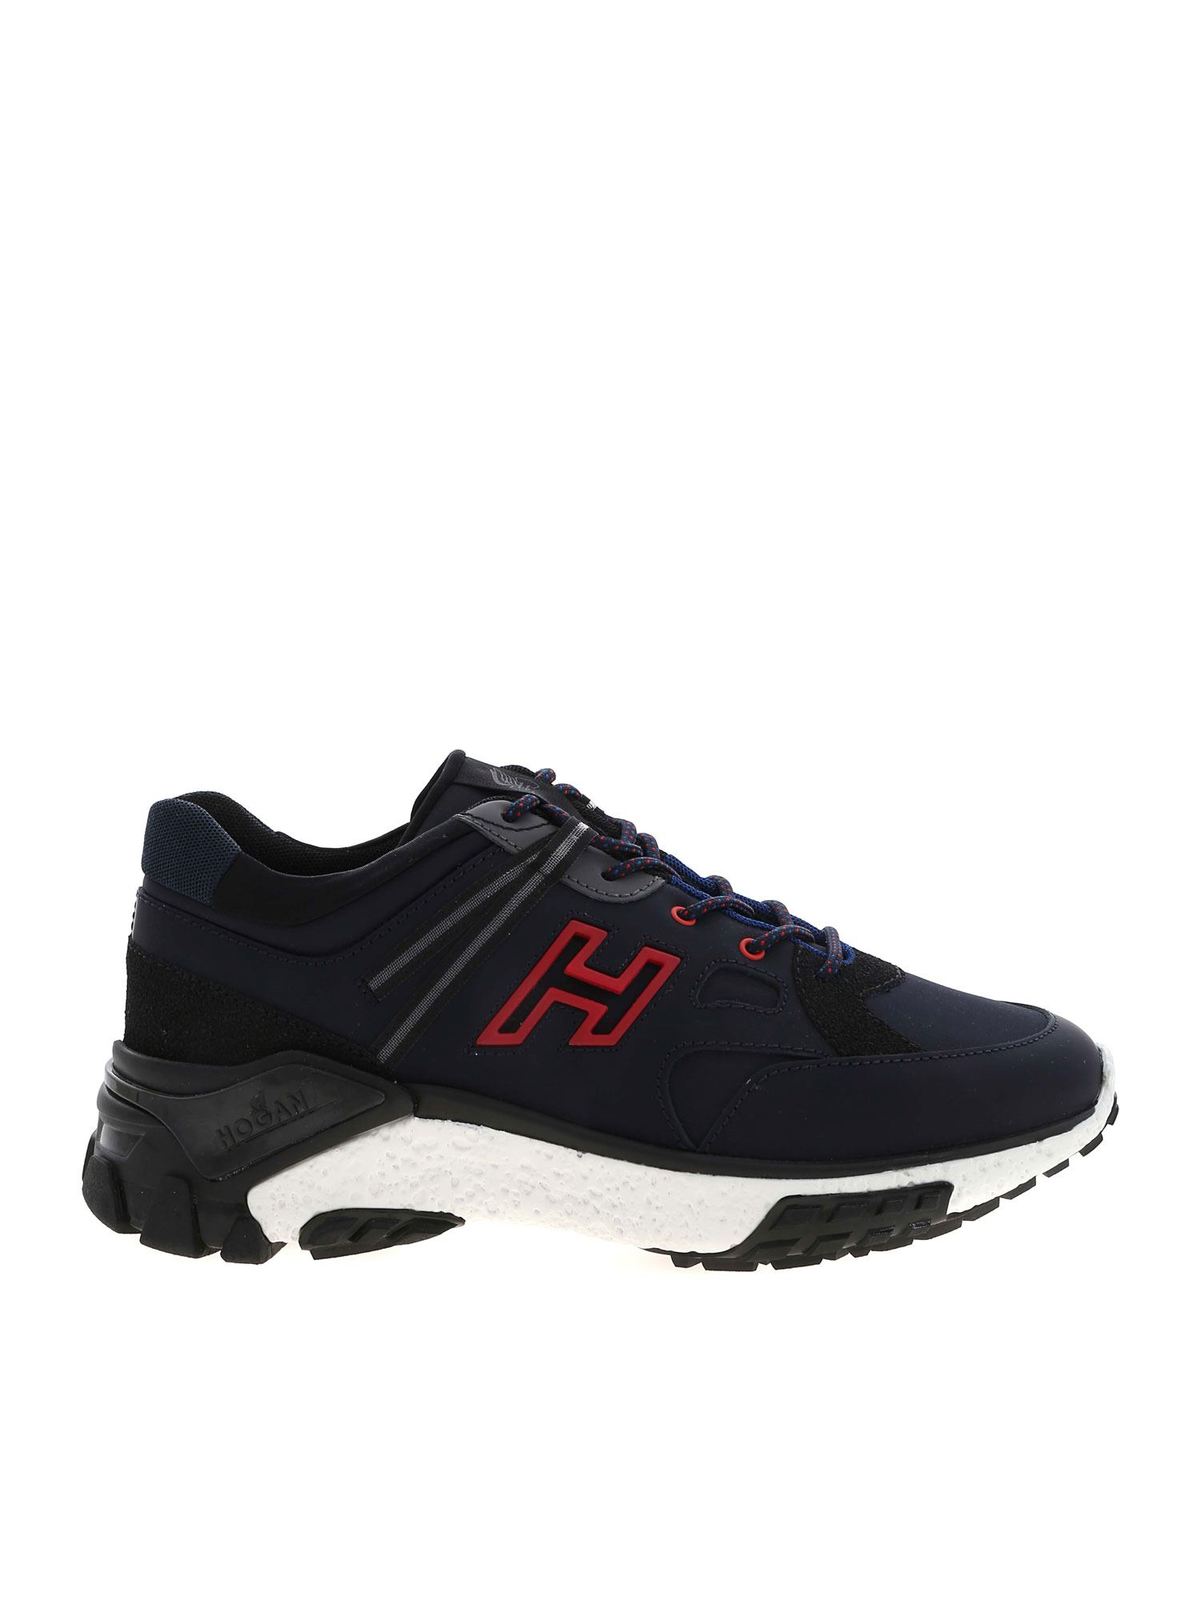 Trainers Hogan - Urban Trek sneakers in blue and black - HXM4770CA70OF9780Z